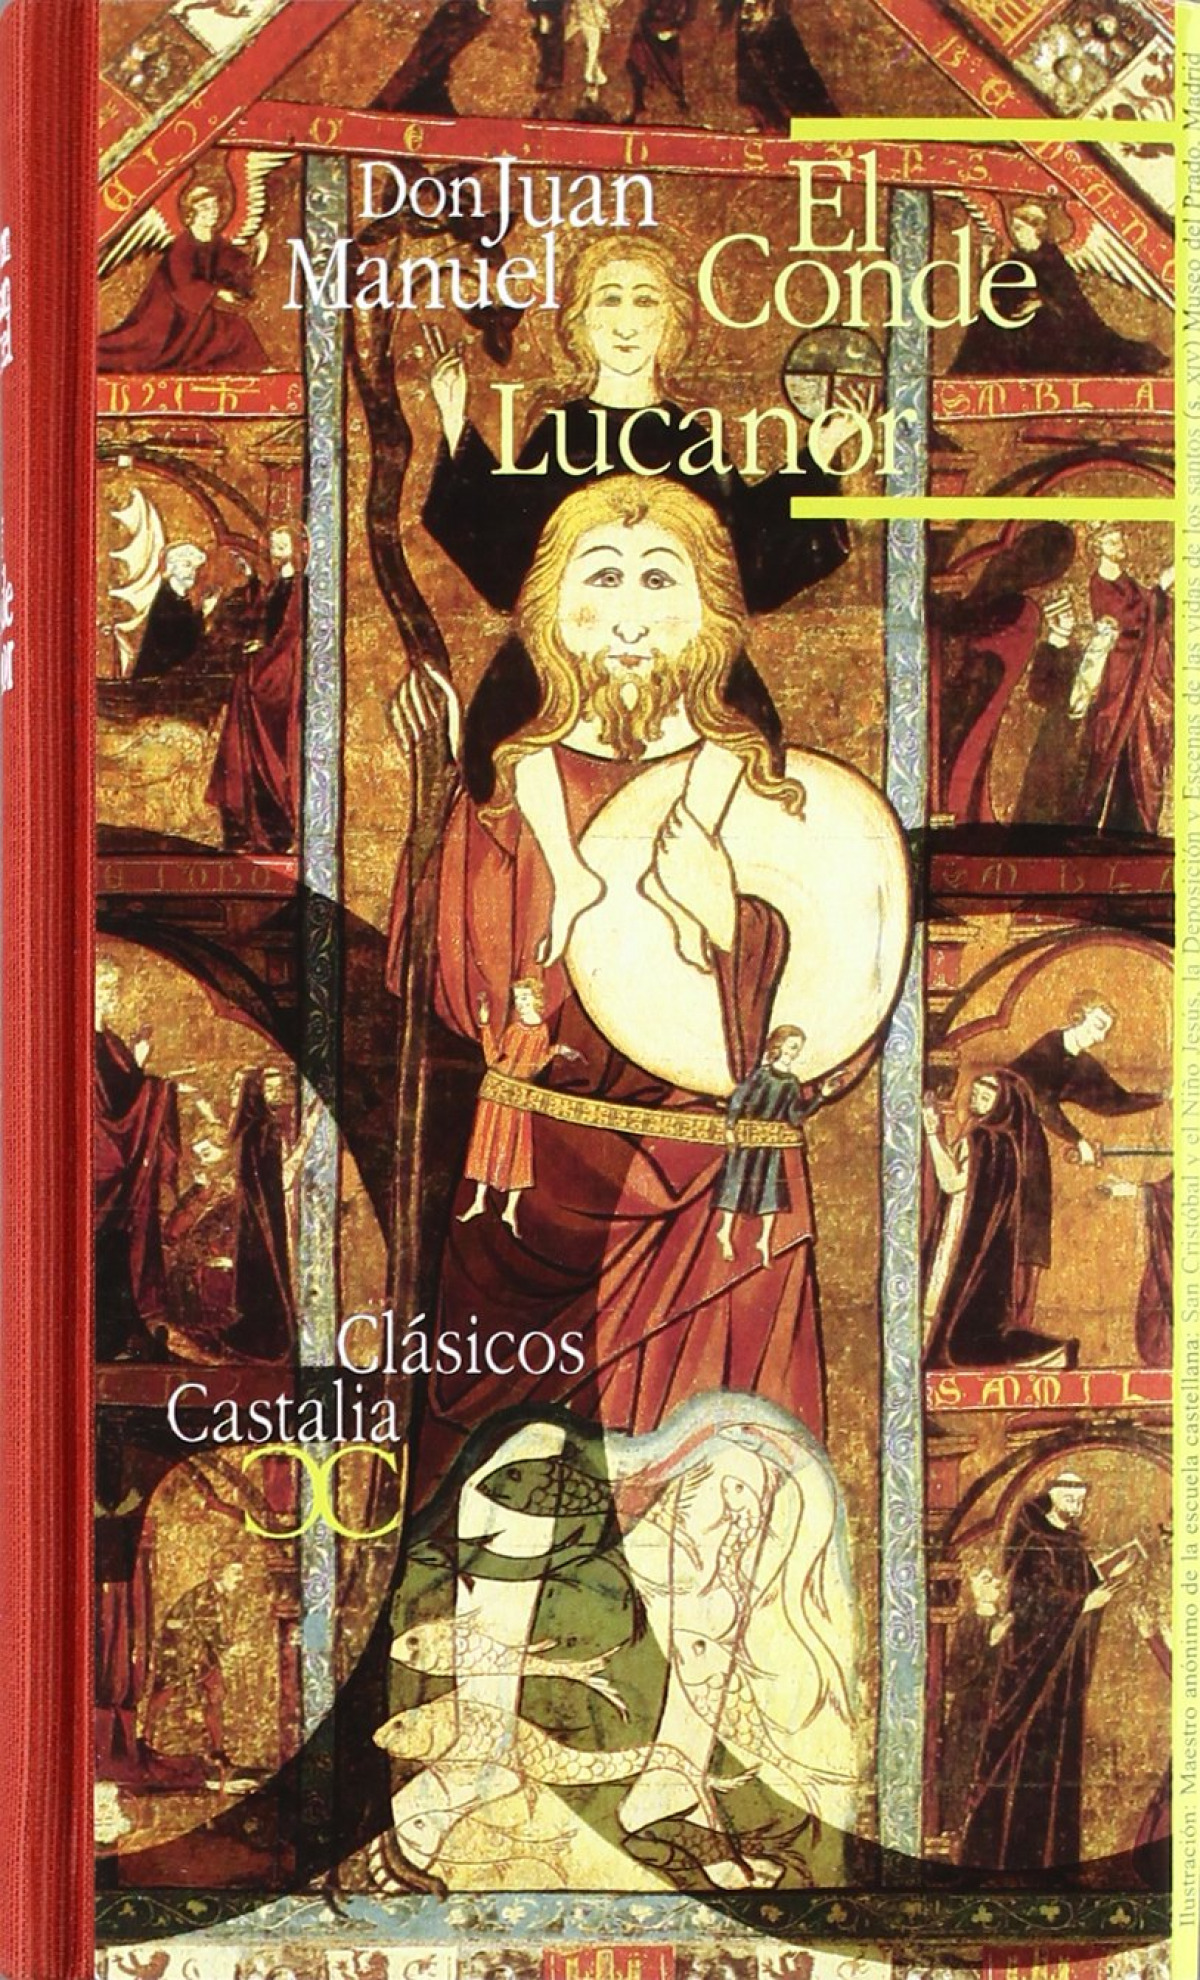 Conde lucanor (t) - Don Juan Manuel